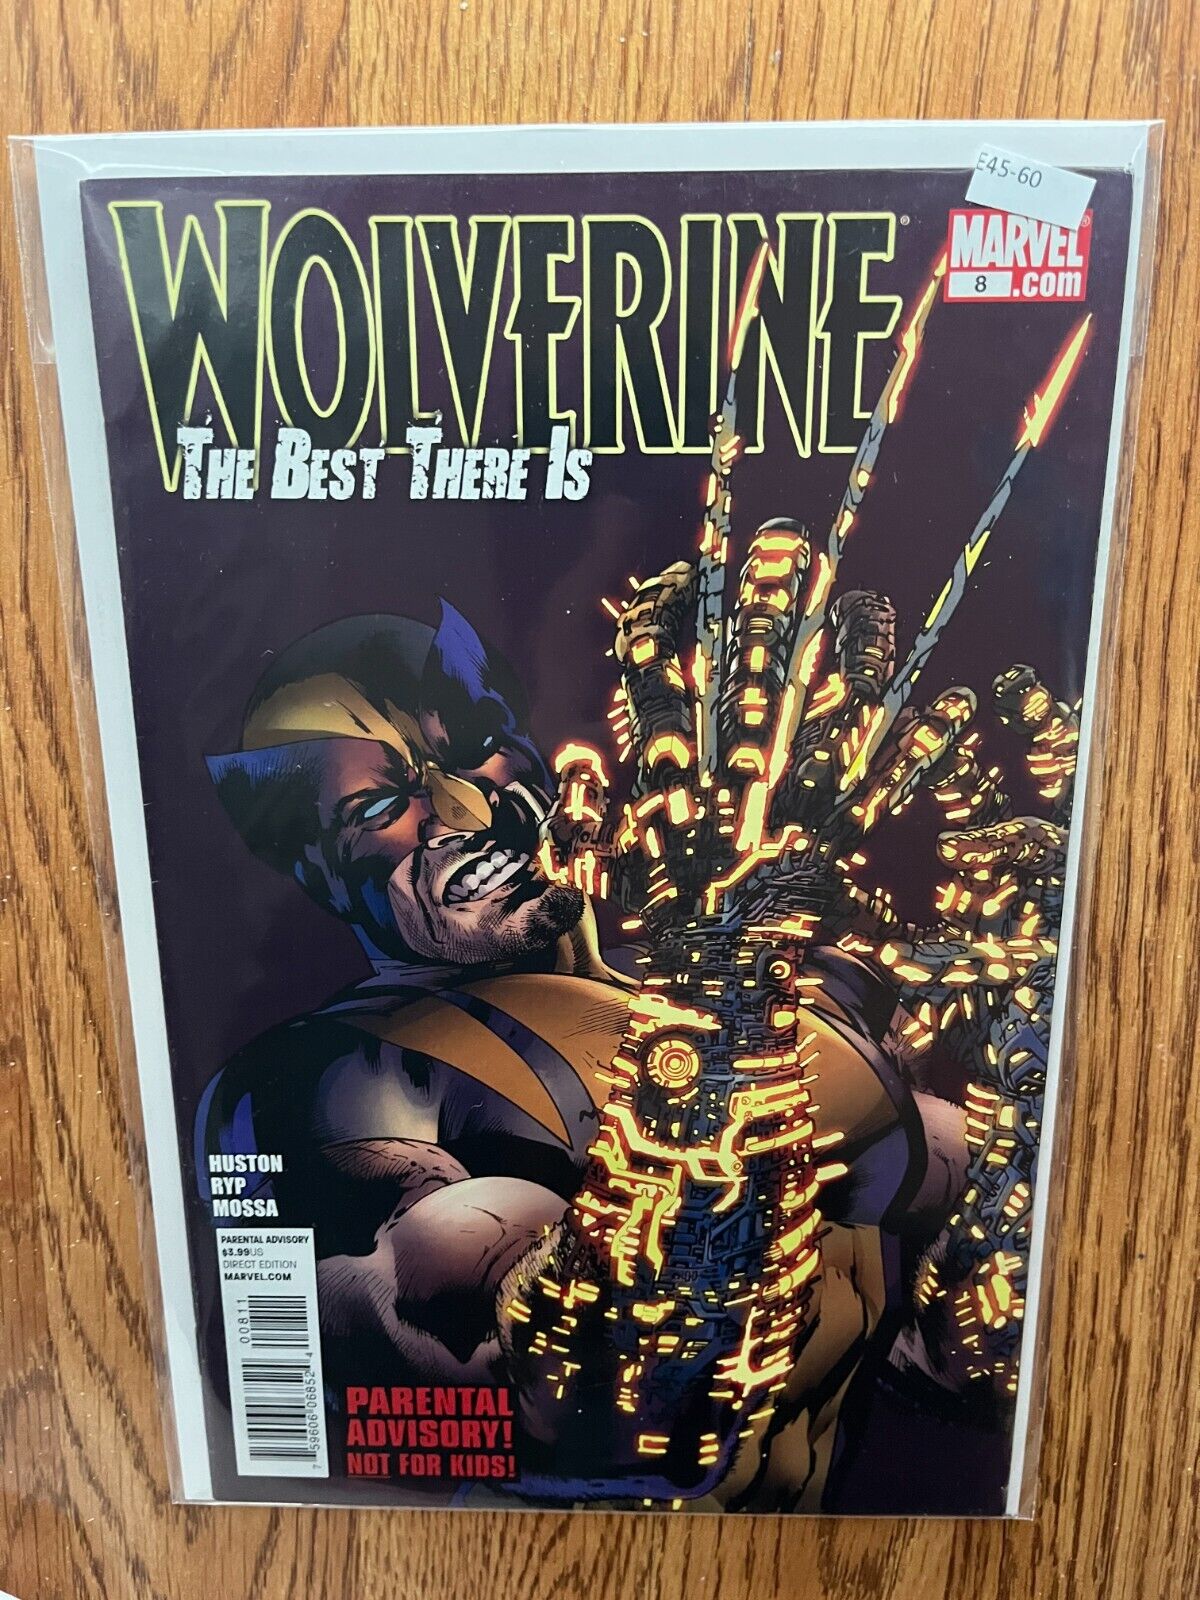 Wolverine 8 Marvel Comics 8.0 - E45-60